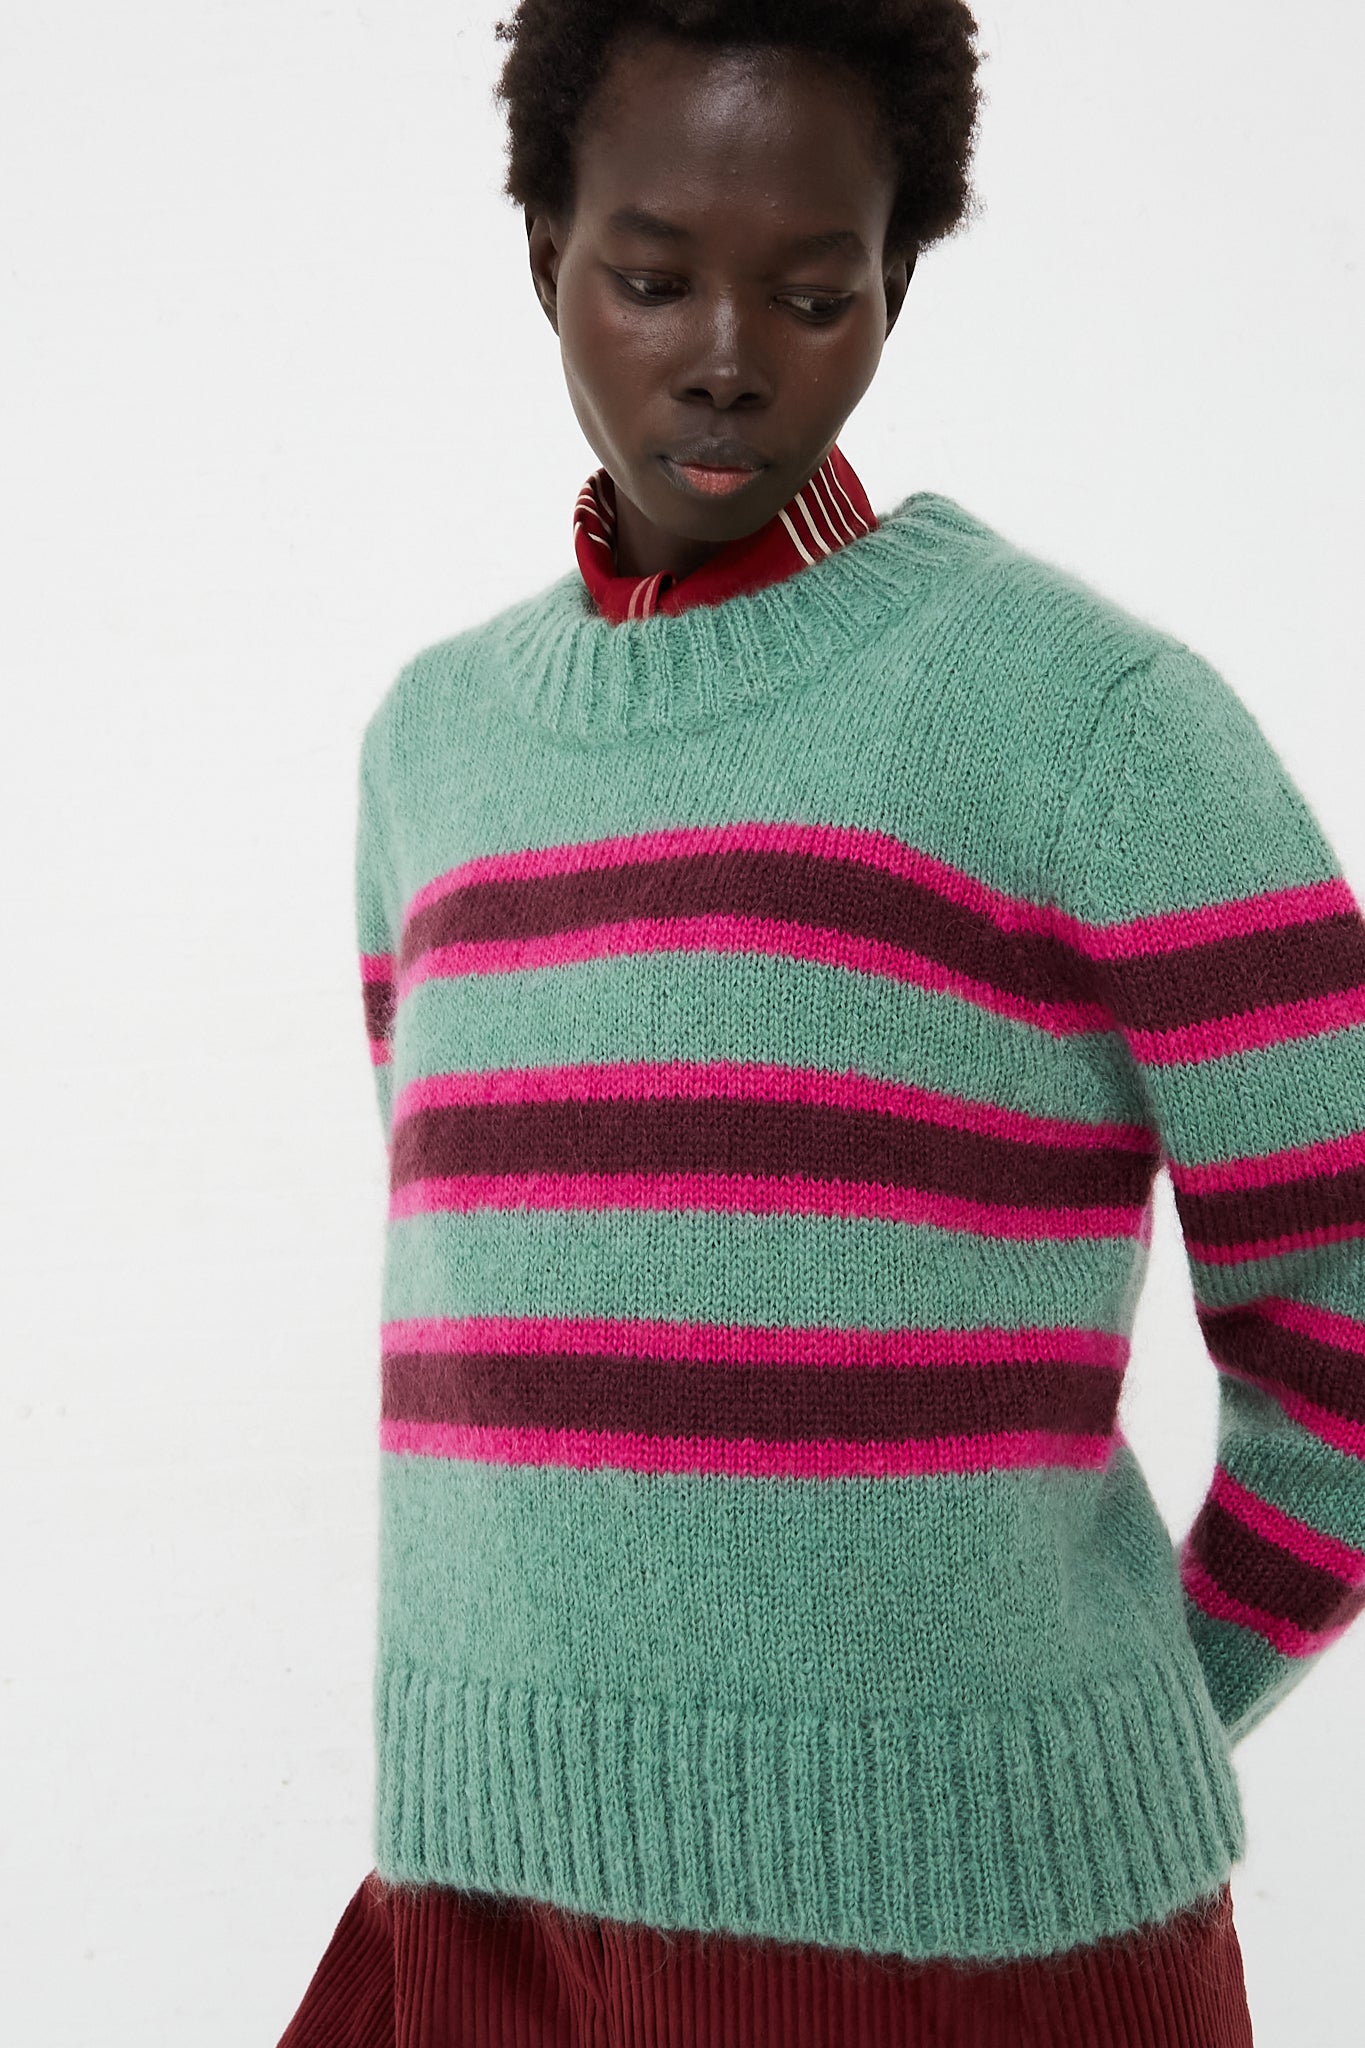 CARON CALLAHAN - Mohair Fletcher Sweater in Seafoam Stripe | Oroboro Store | Front